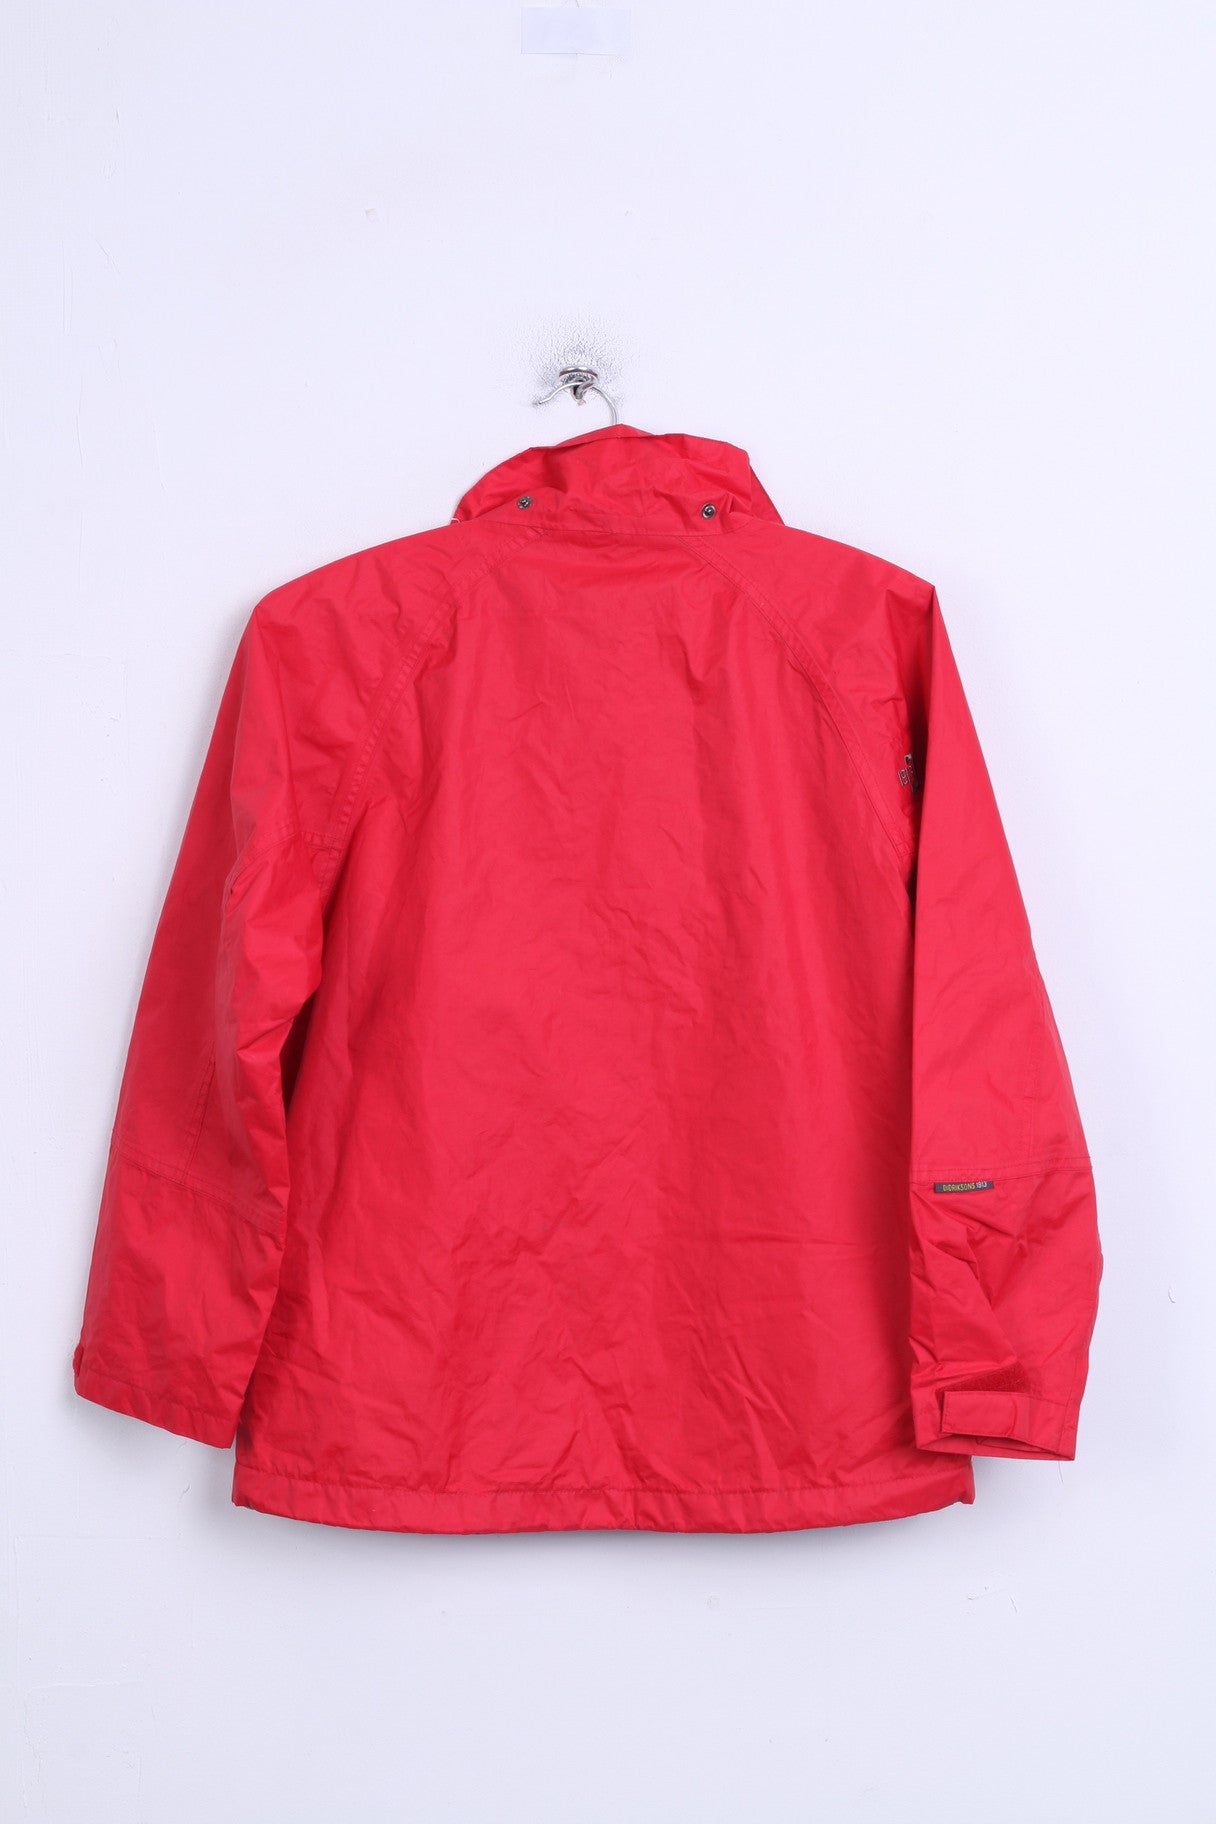 Didriksons Boys 160 Jacket Red Nylon Waterproof Parka Sport - RetrospectClothes